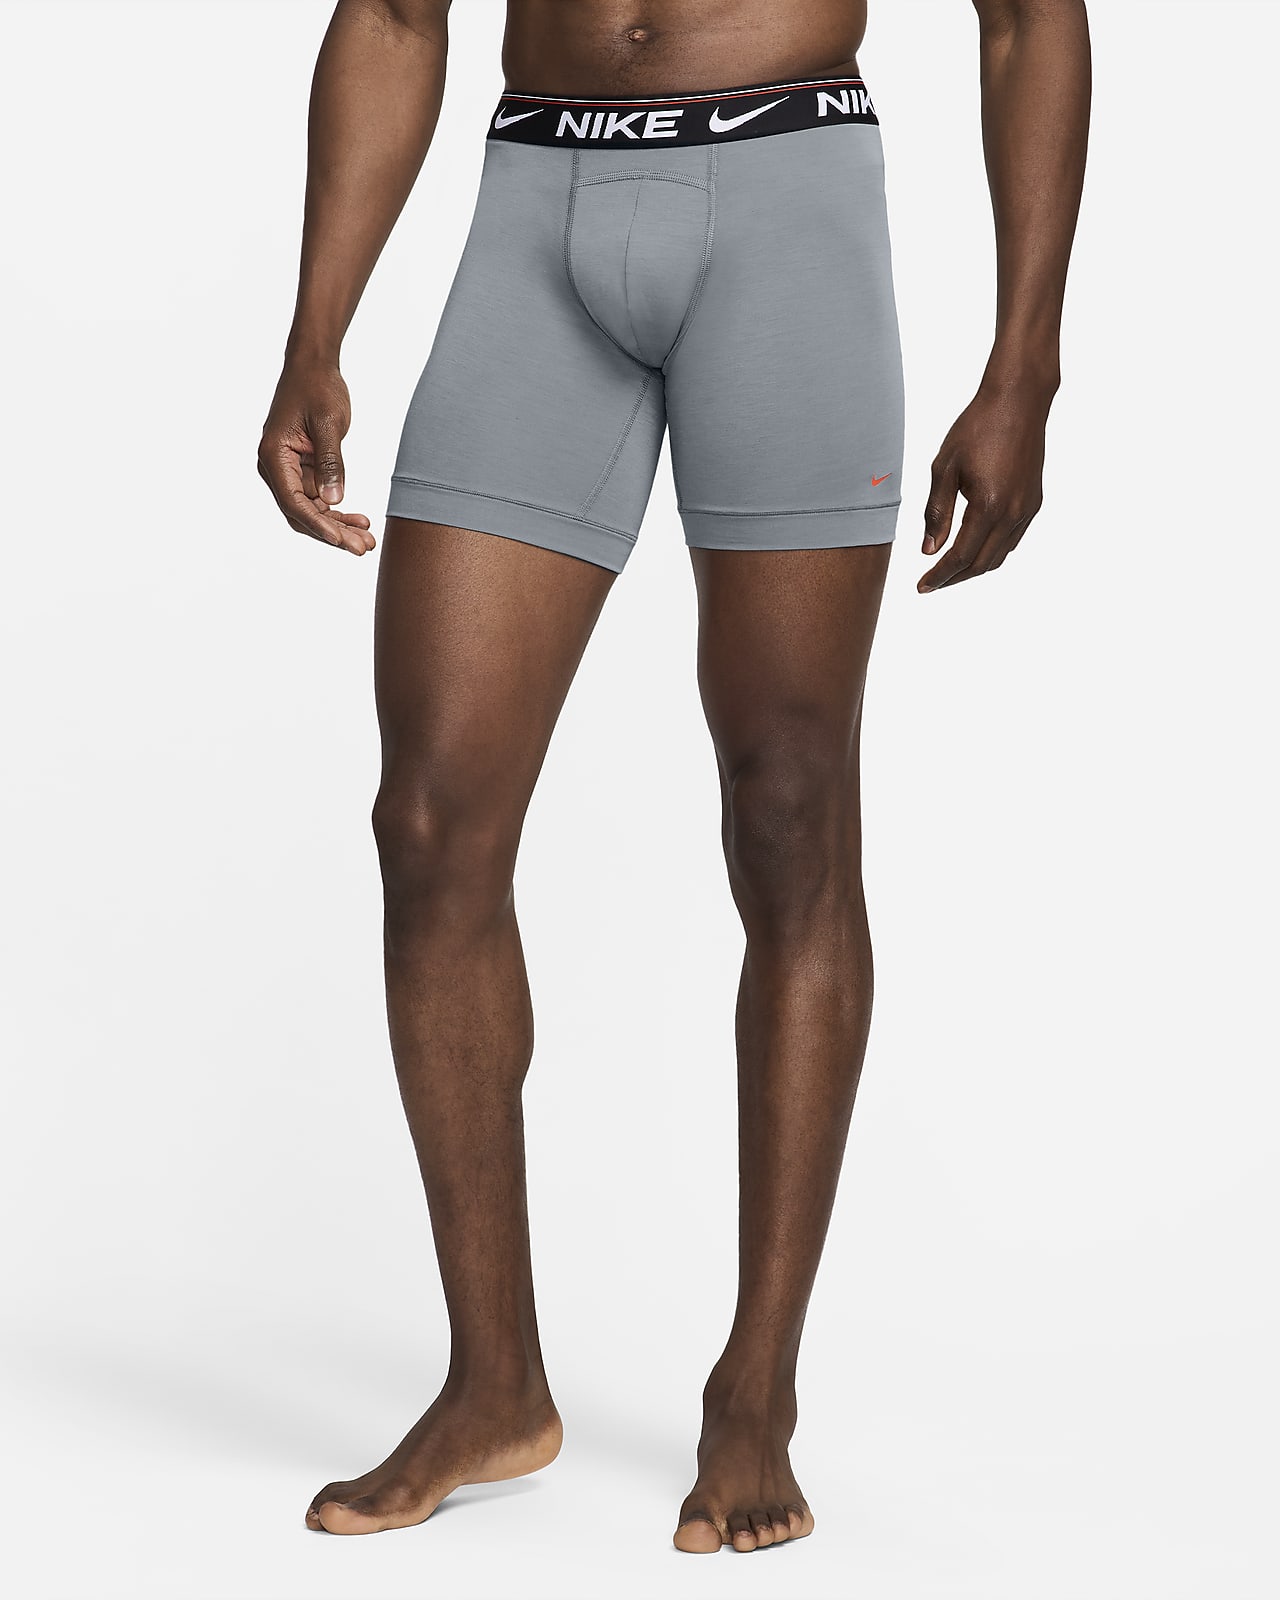 Mens Boxer Briefs-Premium Underwear For Men Comfortable Boxer & Socks-Gift  Box